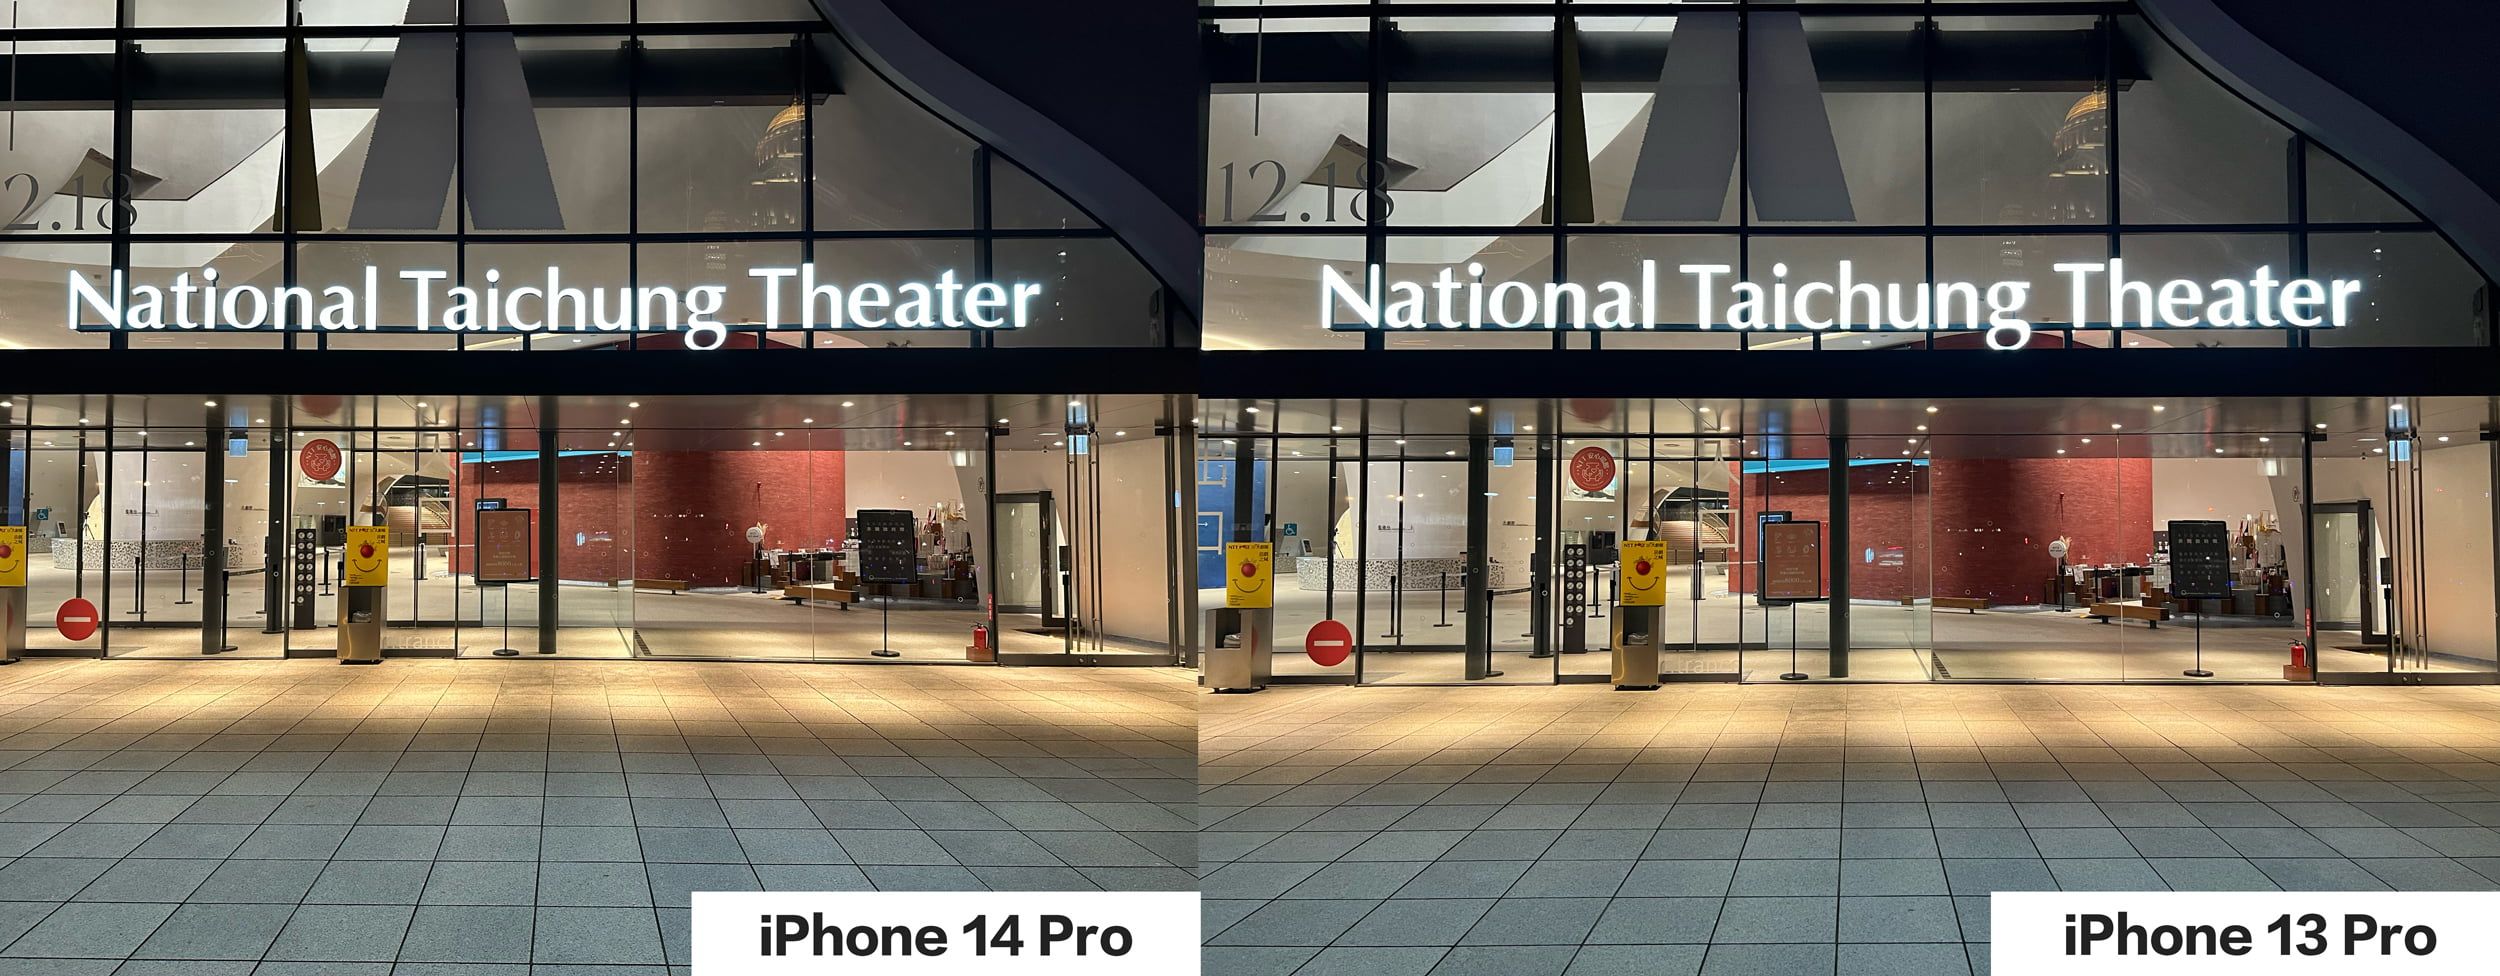 iPhone 14 Pro Night Shot Comparison Test 1